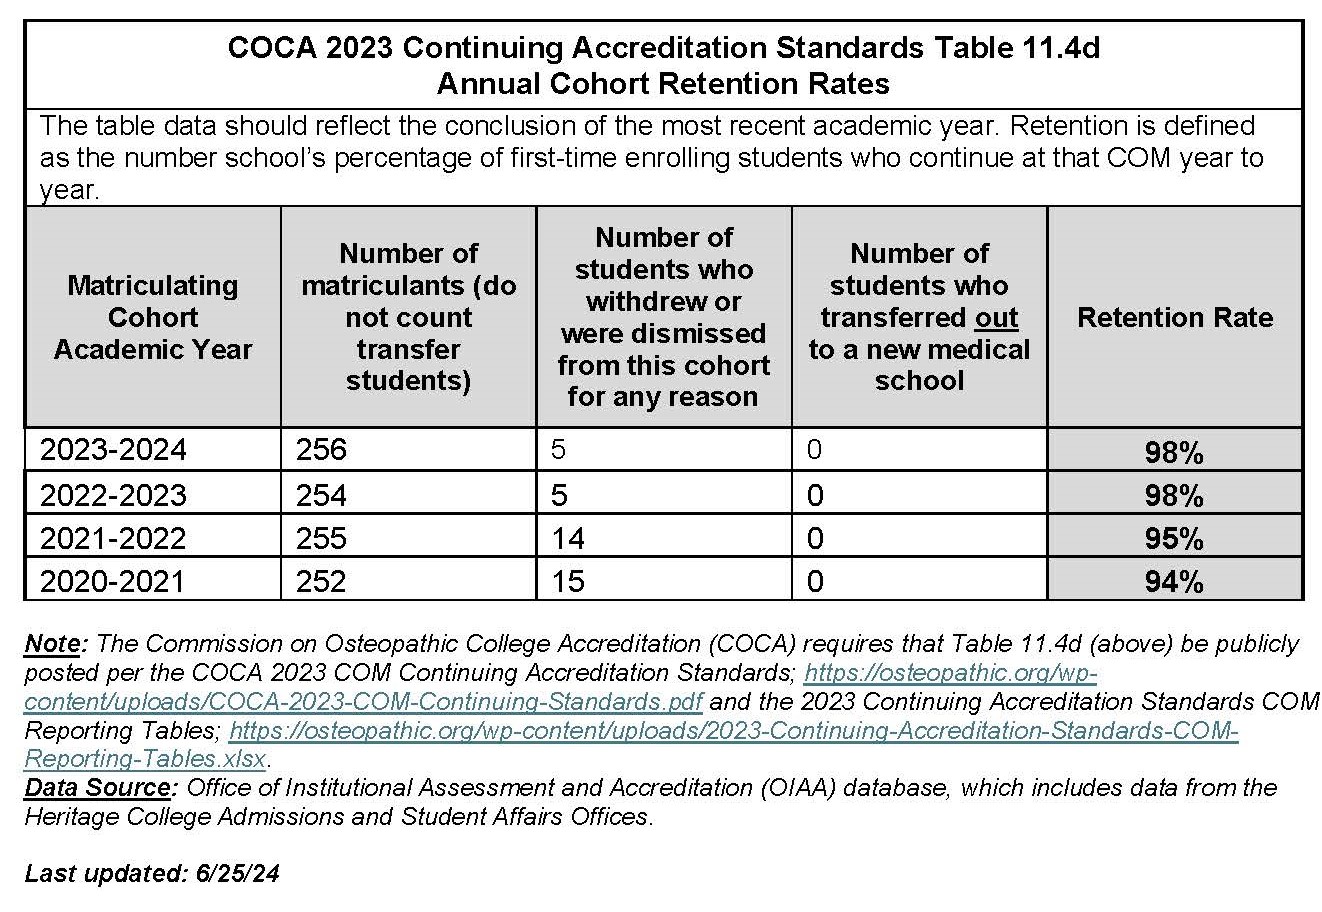 COCA Required Cohort Retention Rates (i.e., Table 11.4d)